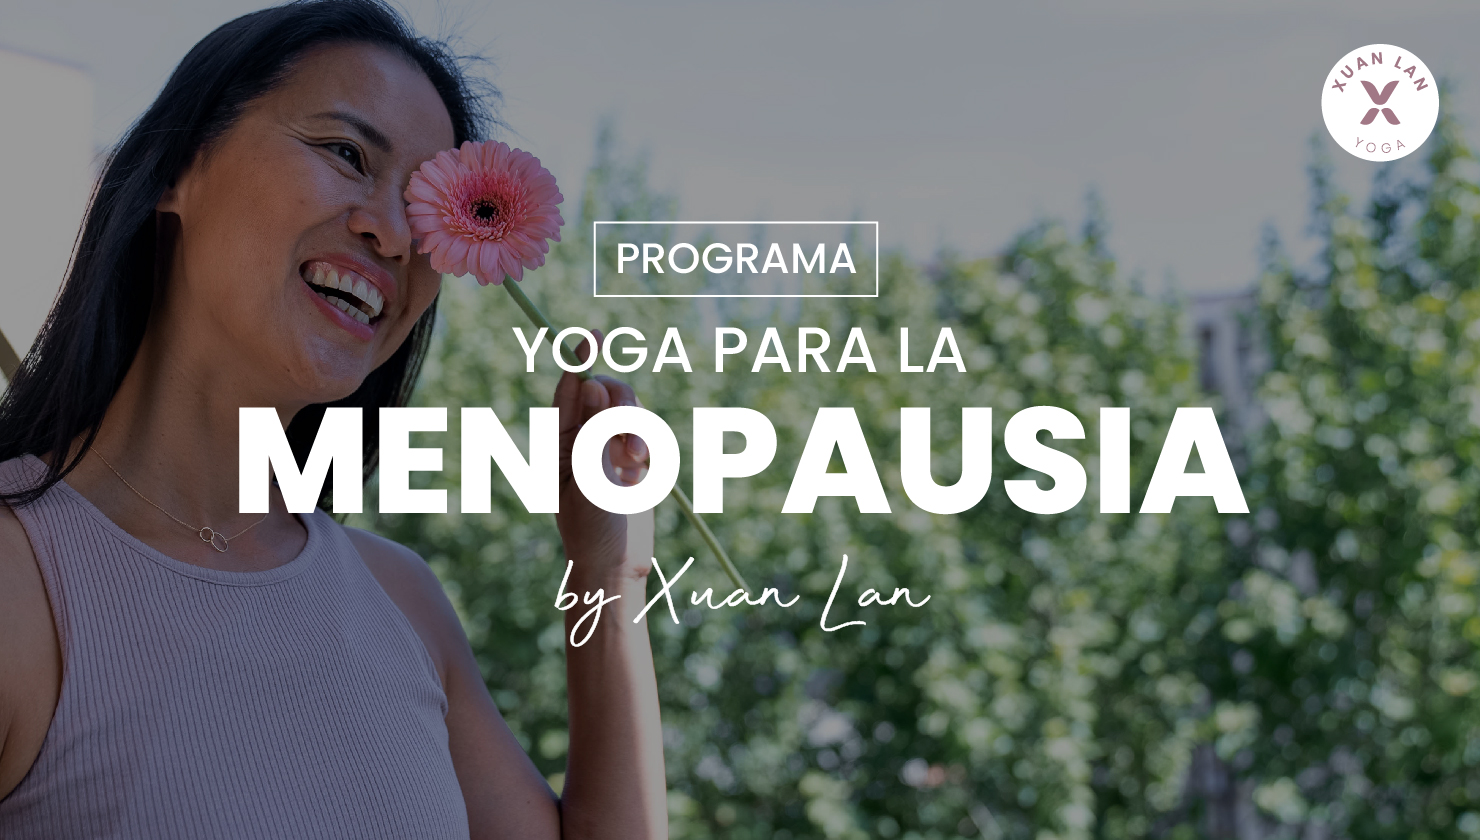 Programa menopausia_Portada